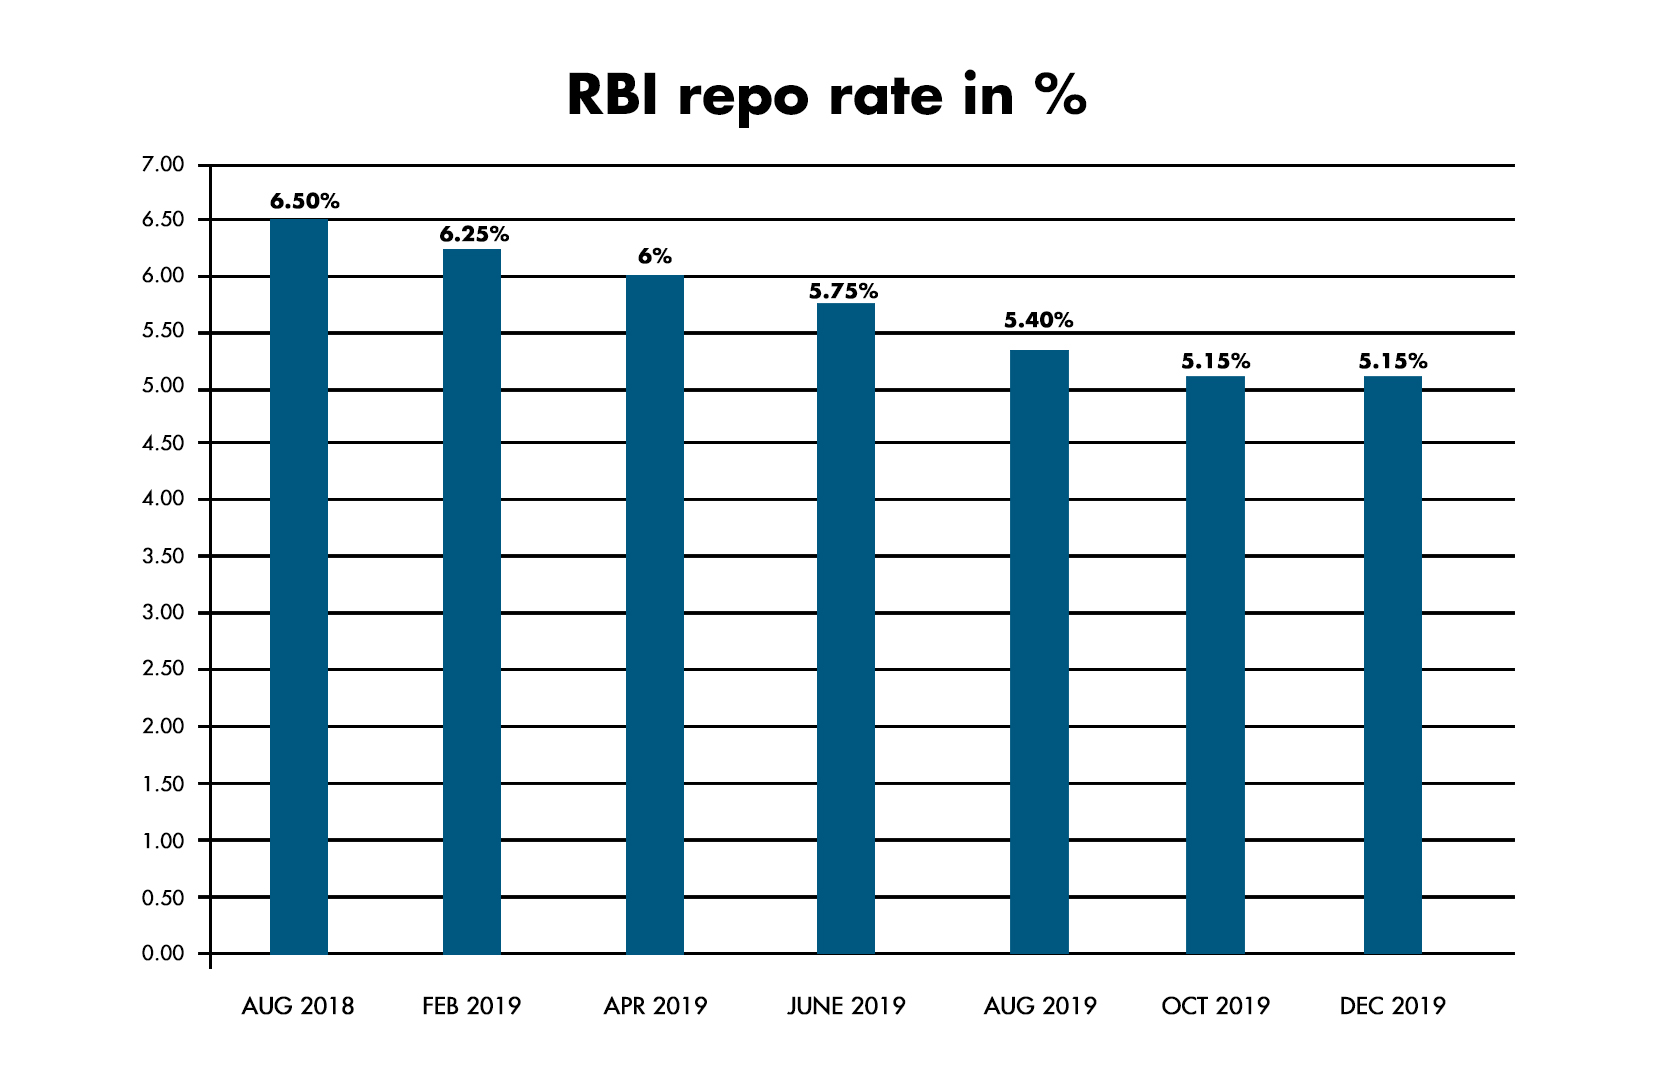 RBI's repo rate in percentage